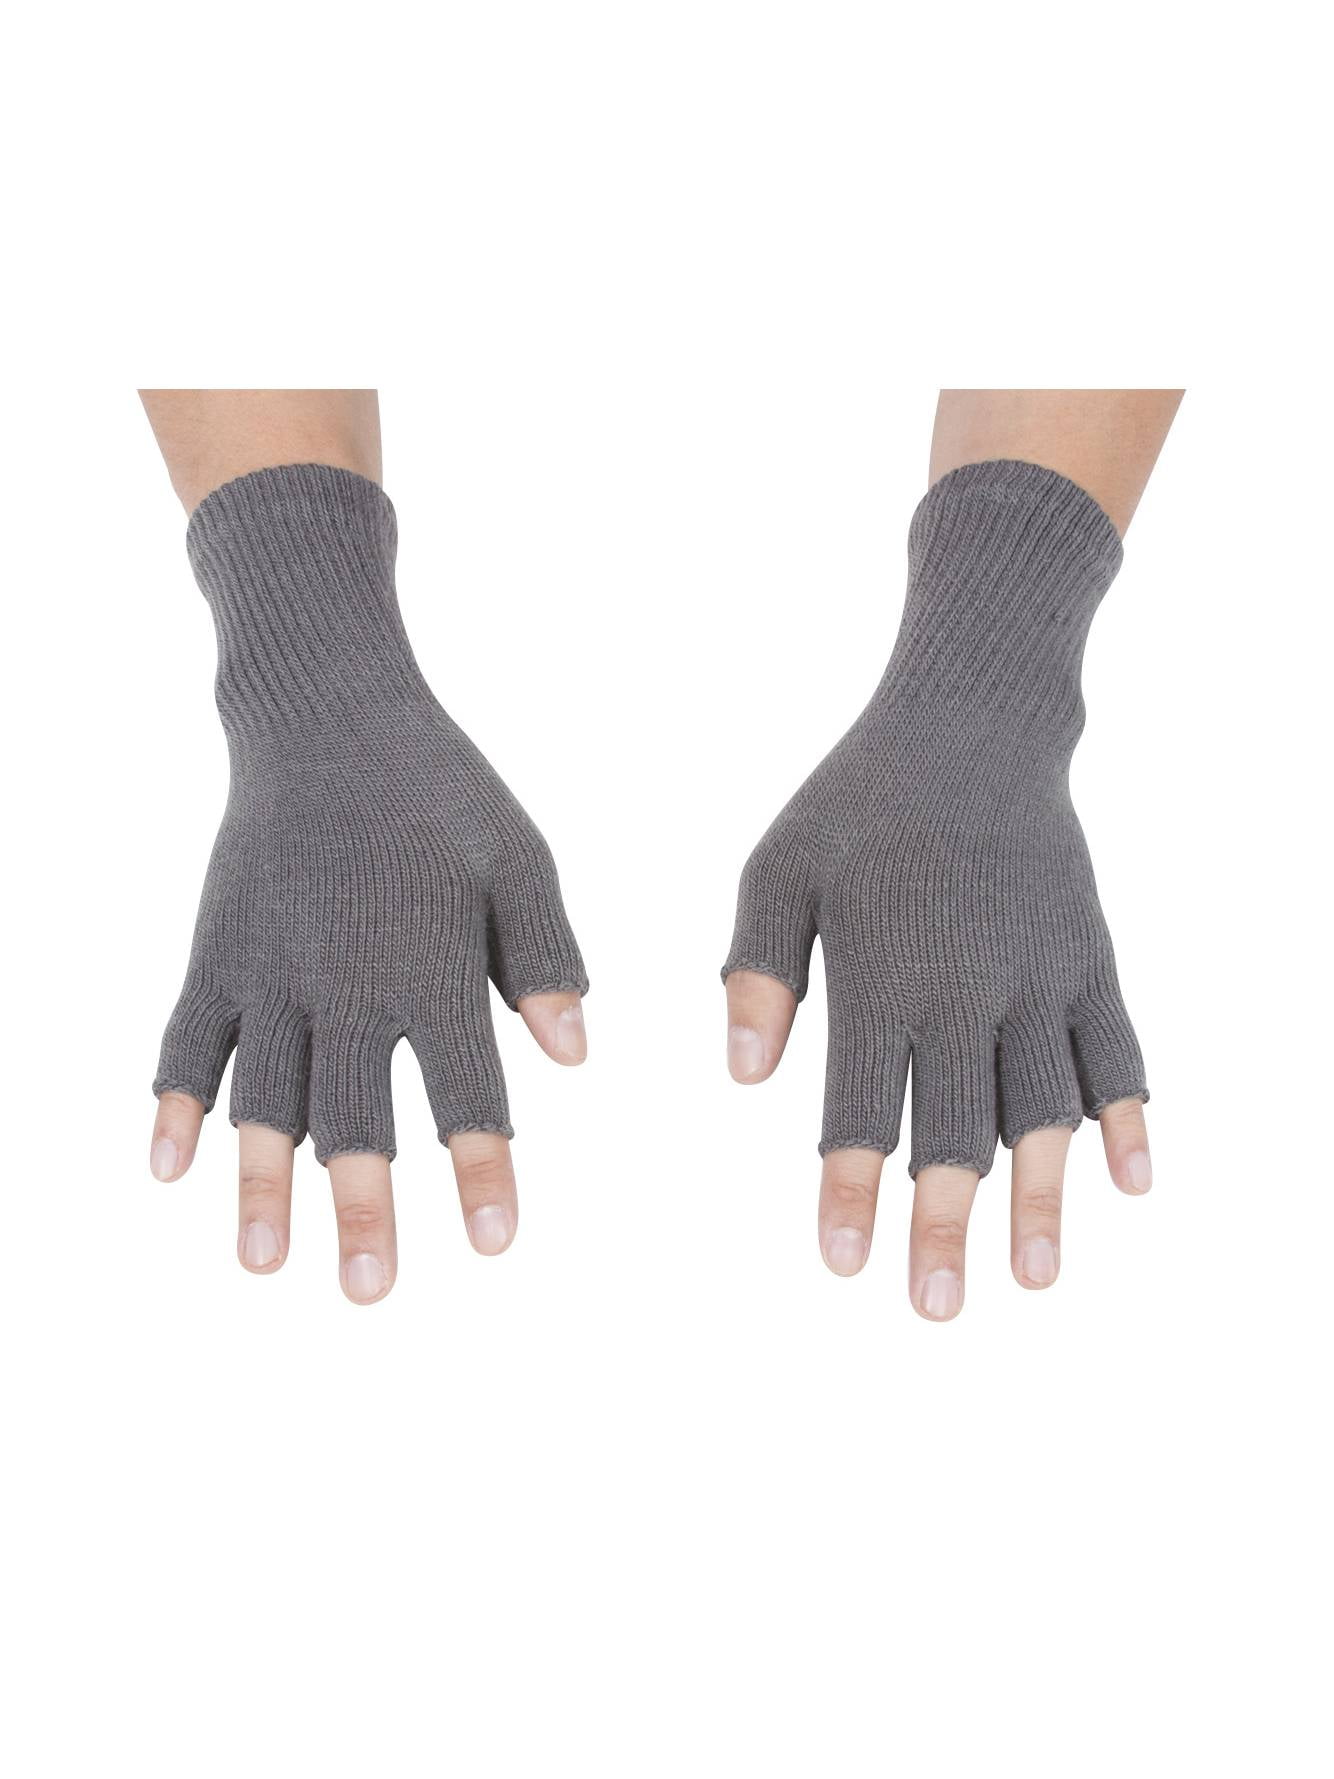 Warm Gloves, Unisex Blue Navy Finger Fingerless Stretchy Knit Half Gravity Threads